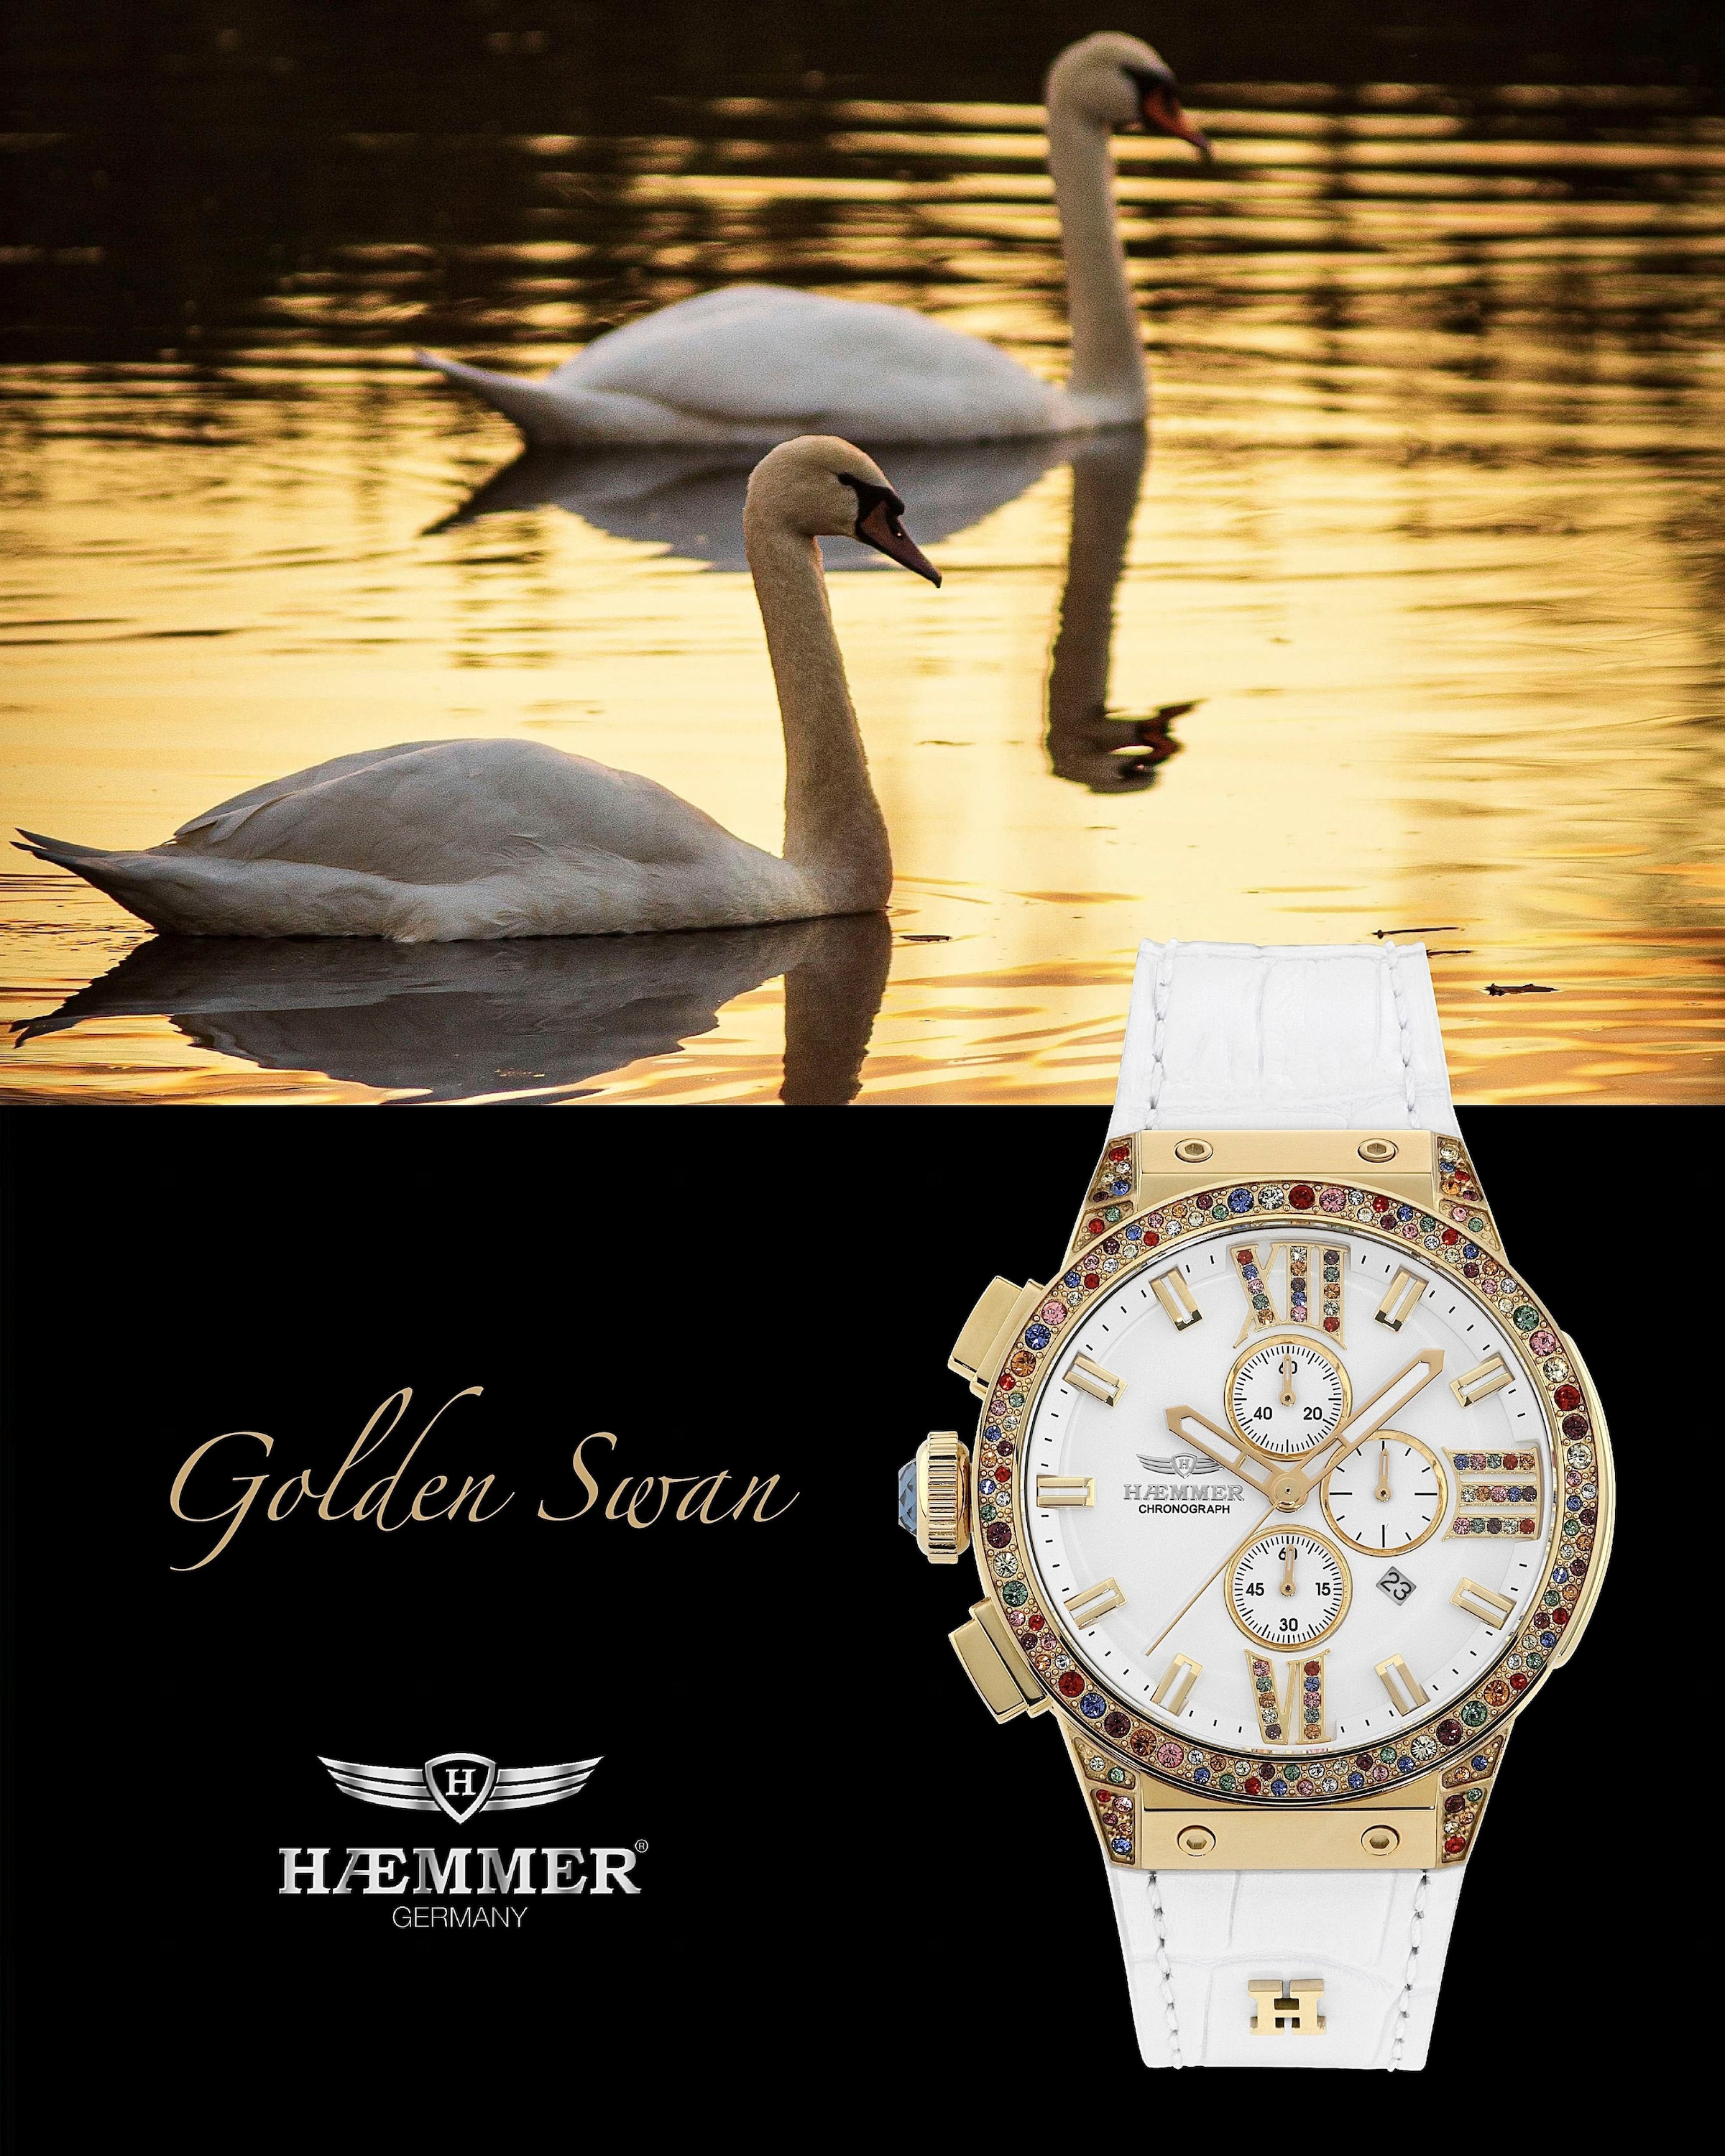 HAEMMER GERMANY Chronograph »GOLDEN SWAN, E-037« online kaufen | BAUR